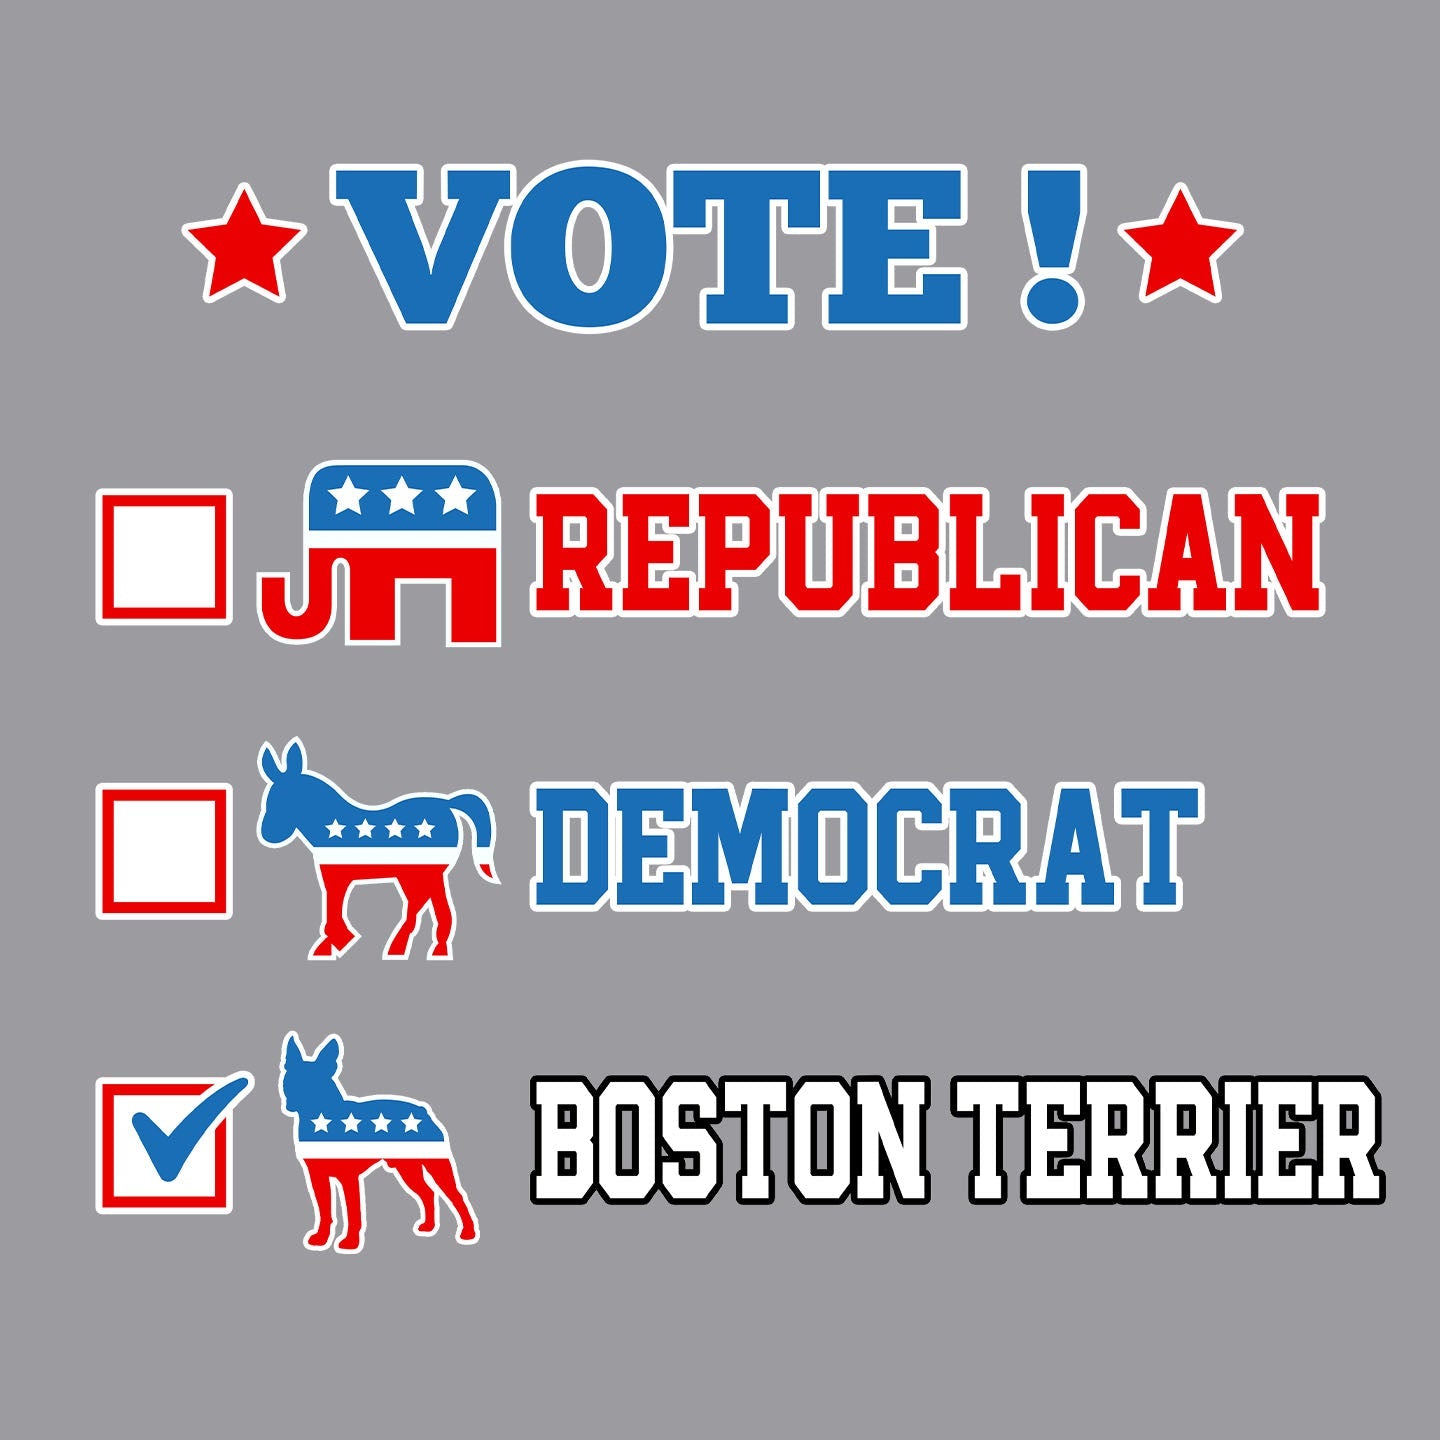 Vote for the Boston Terrier - Adult Unisex Crewneck Sweatshirt